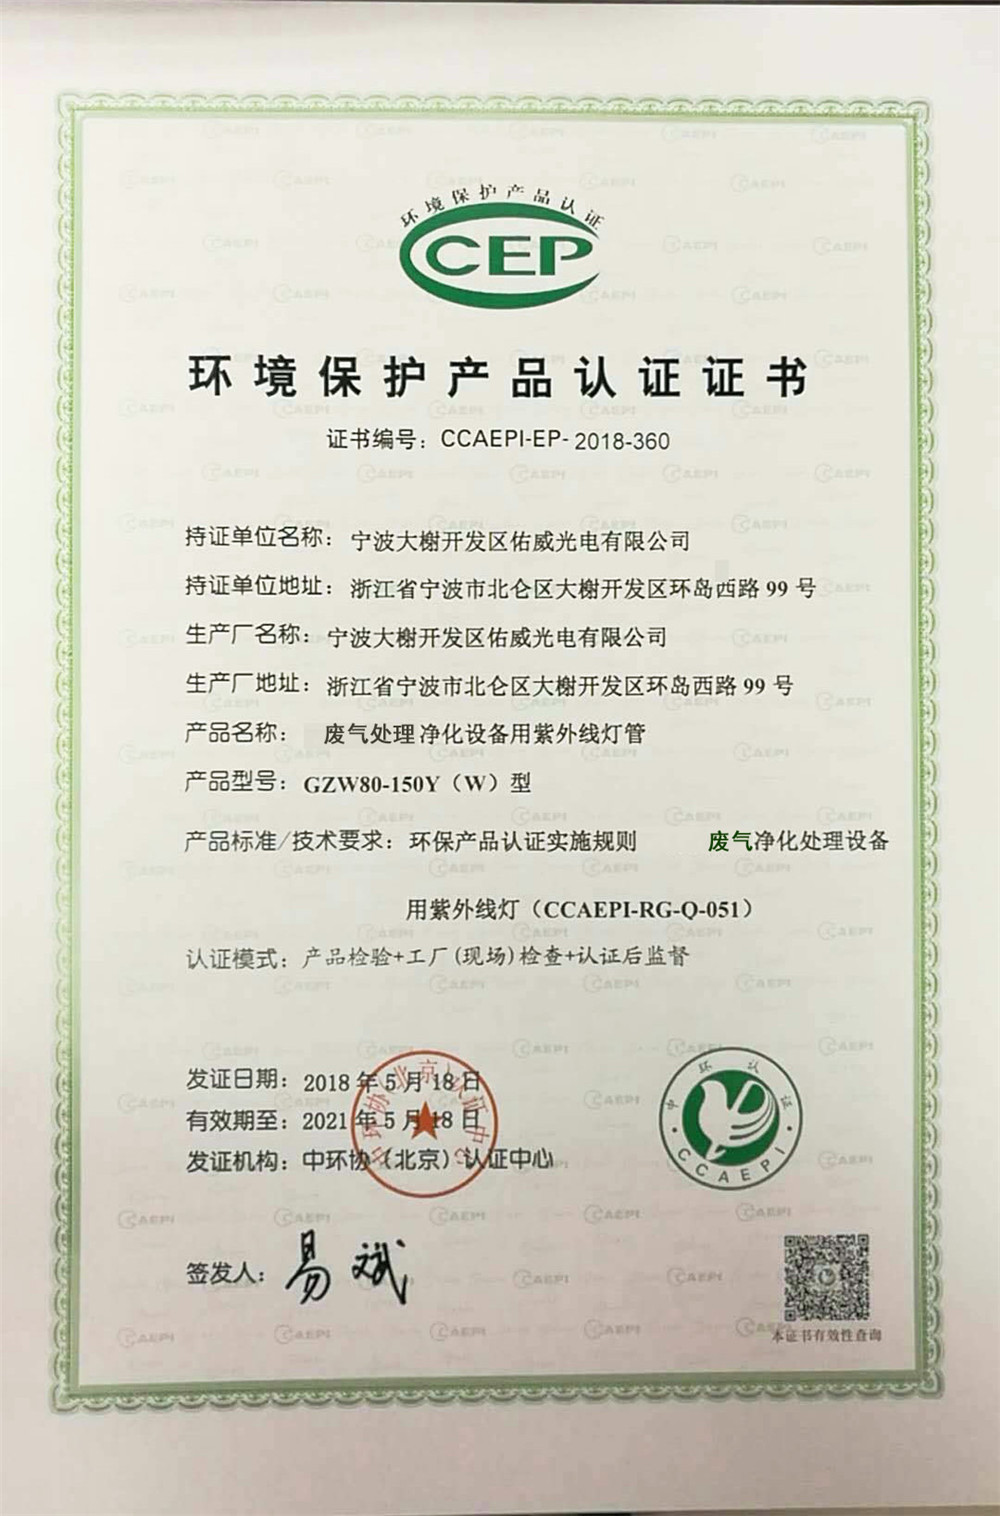 Ningbo Uv Light & Electricity Co., Ltd. Certifications